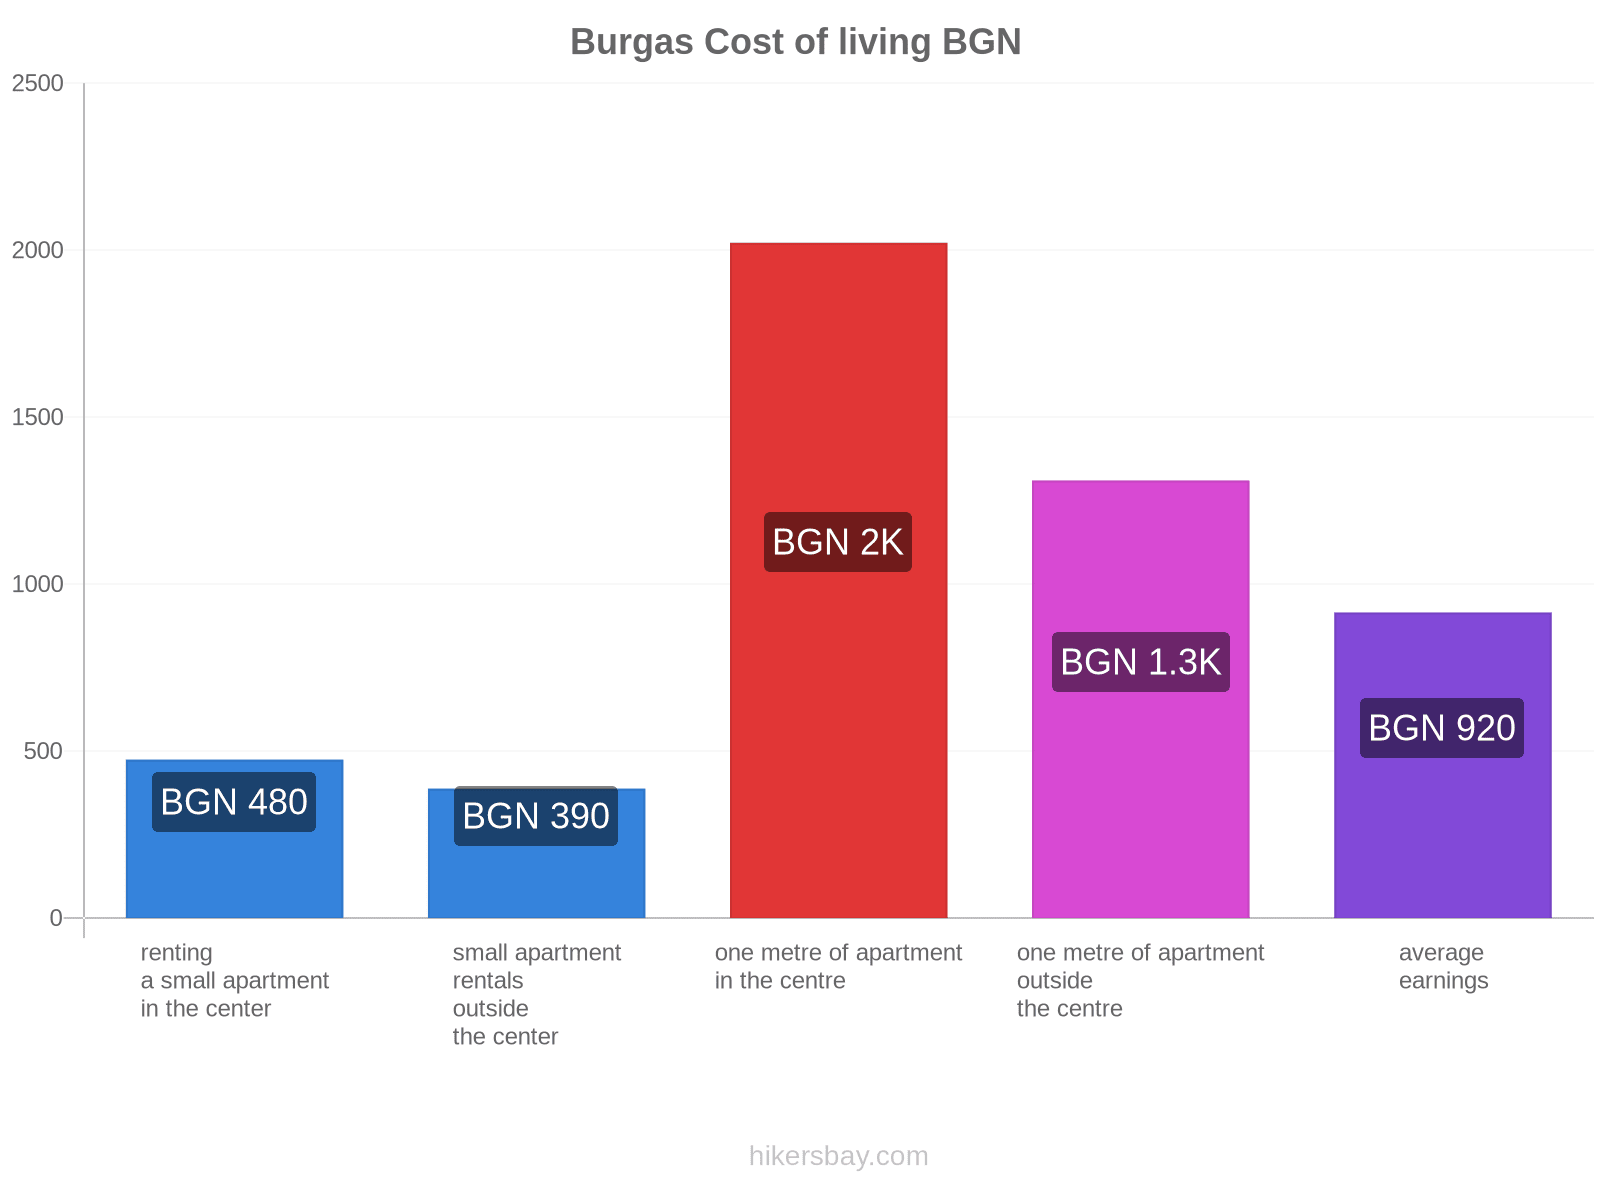 Burgas cost of living hikersbay.com